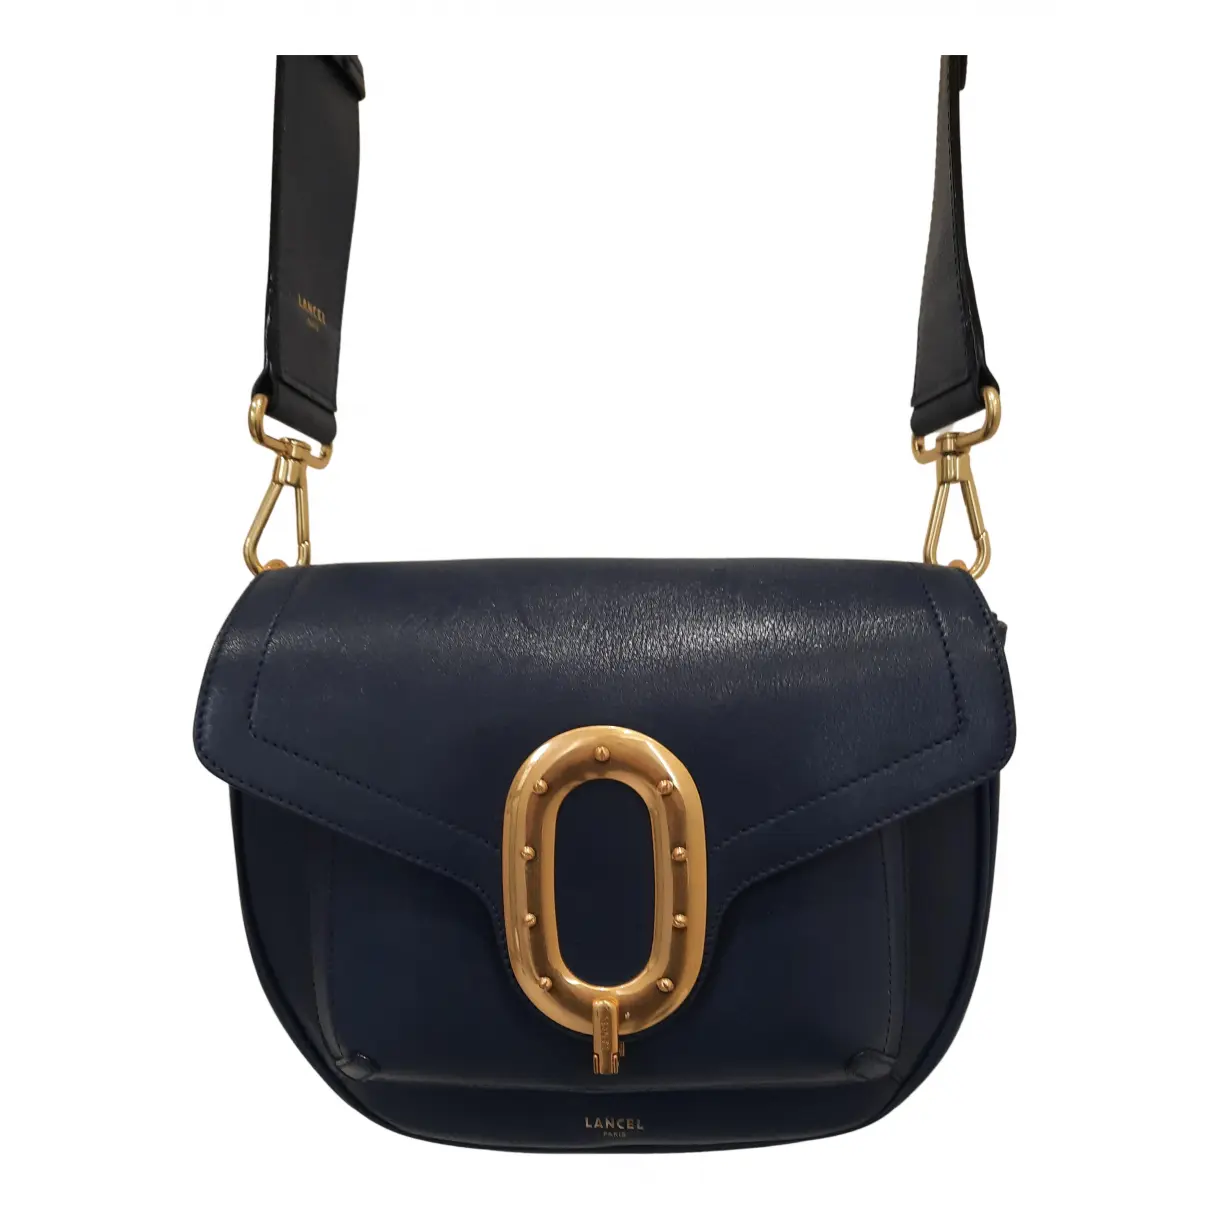 Romane leather handbag Lancel